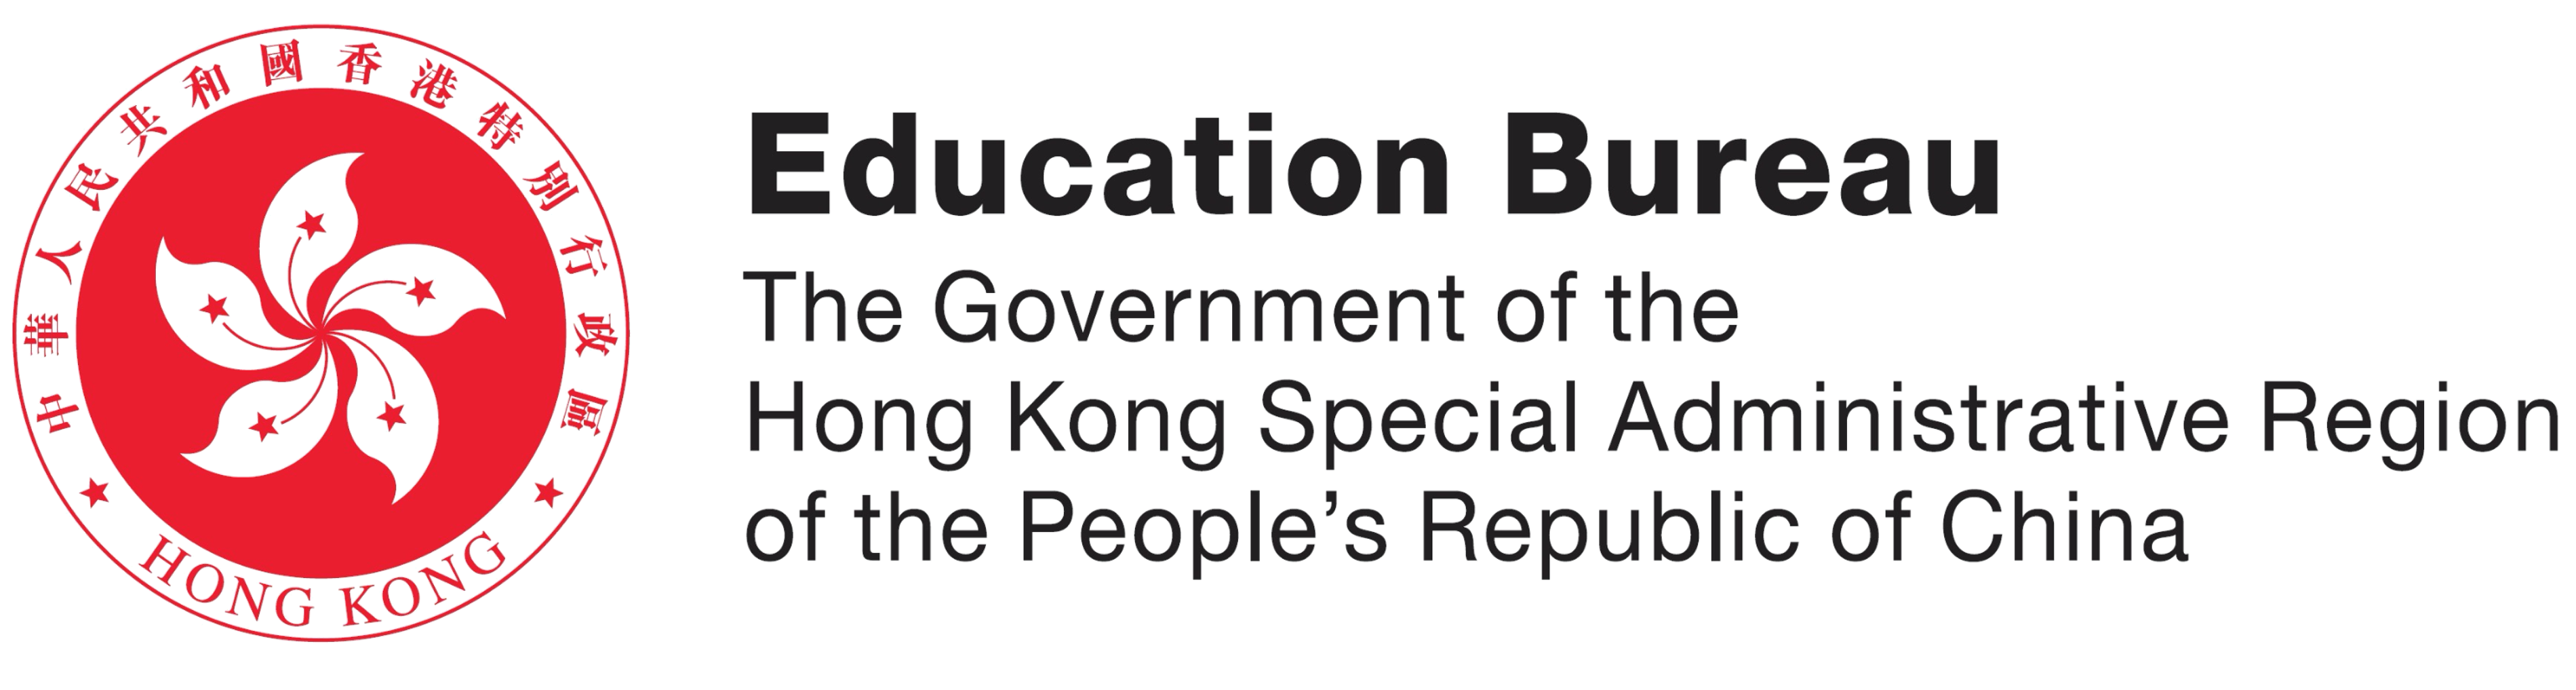 Education Bureau Homepage, HKSAR